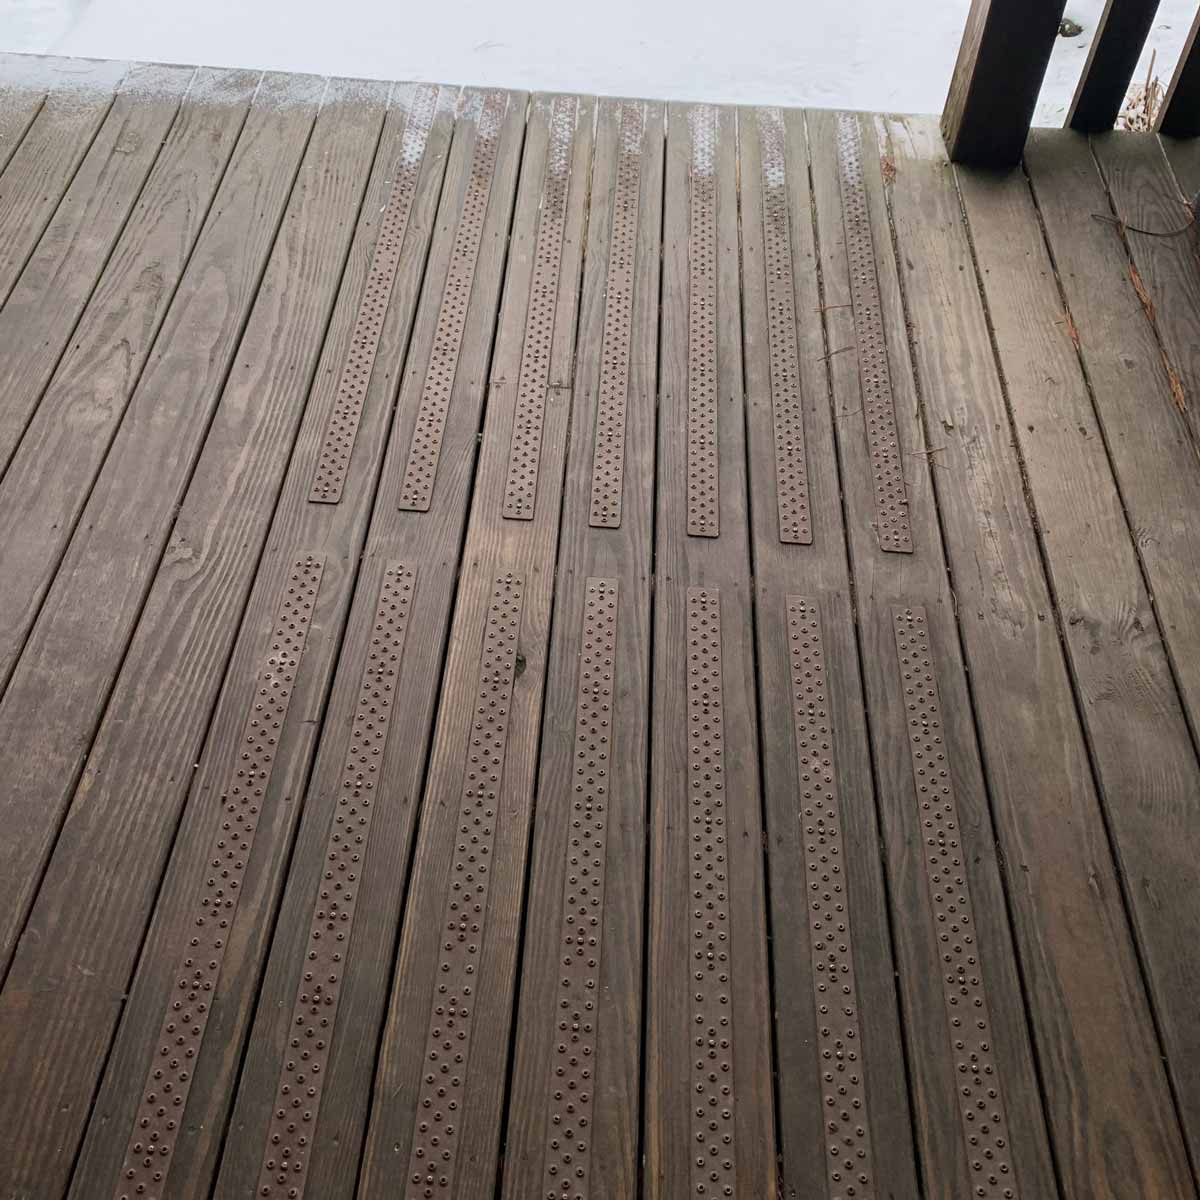 Deck Treads on treated wood deck